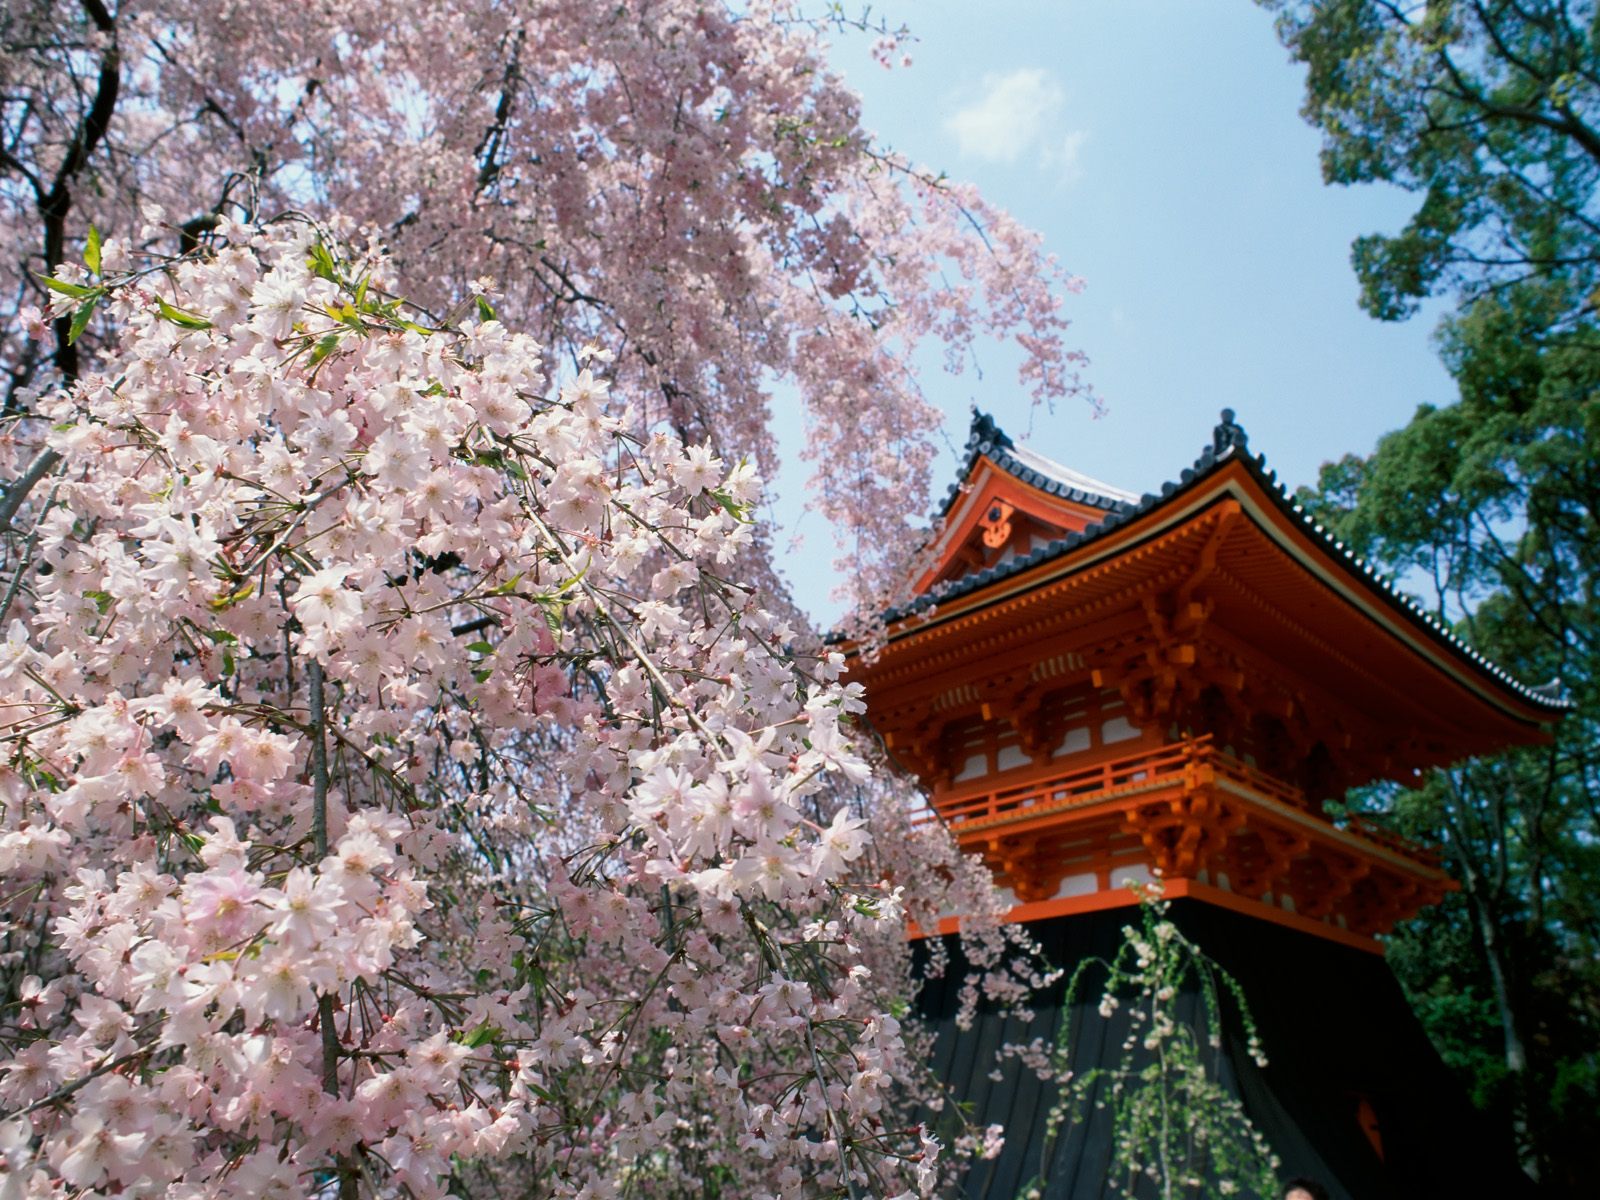 http://2.bp.blogspot.com/_708_wIdtSh0/S_5iQsuD5FI/AAAAAAAABEY/pKi0RULJmxY/s1600/Cherry+Blossoms,+Ninnaji+Temple,+Kyoto,+Japan.jpg